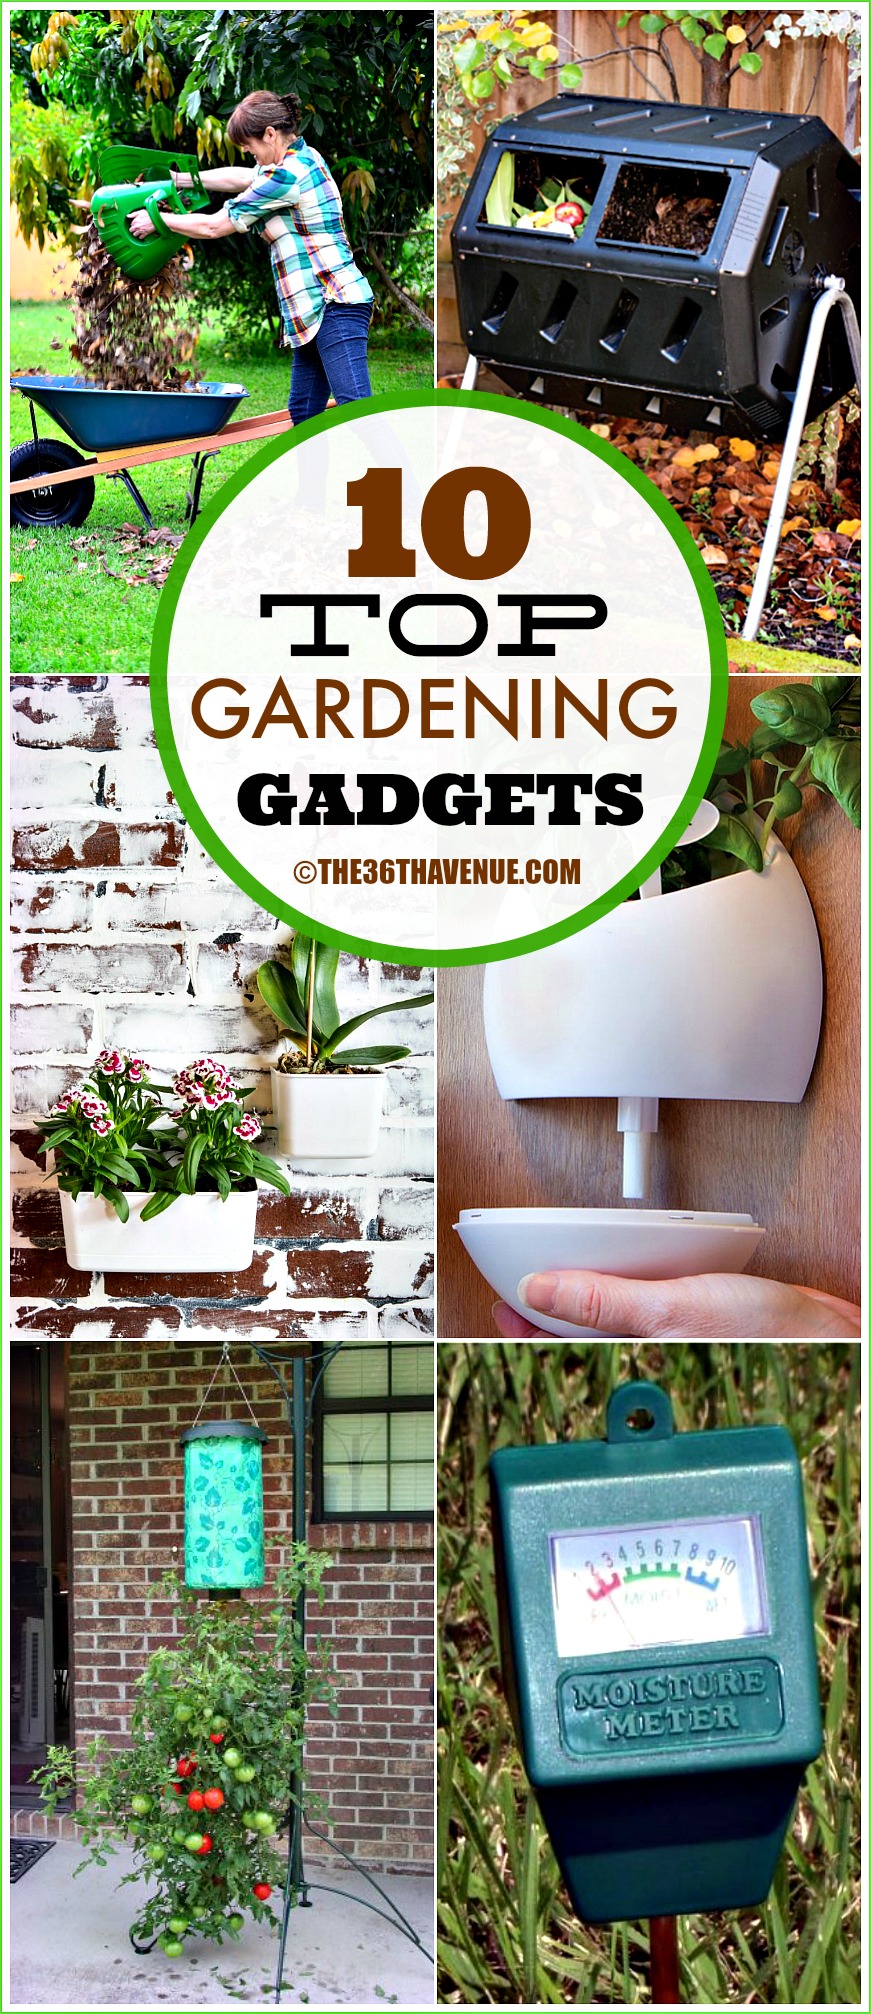 Top 10 Gardening Gadgets the36thavenue.com